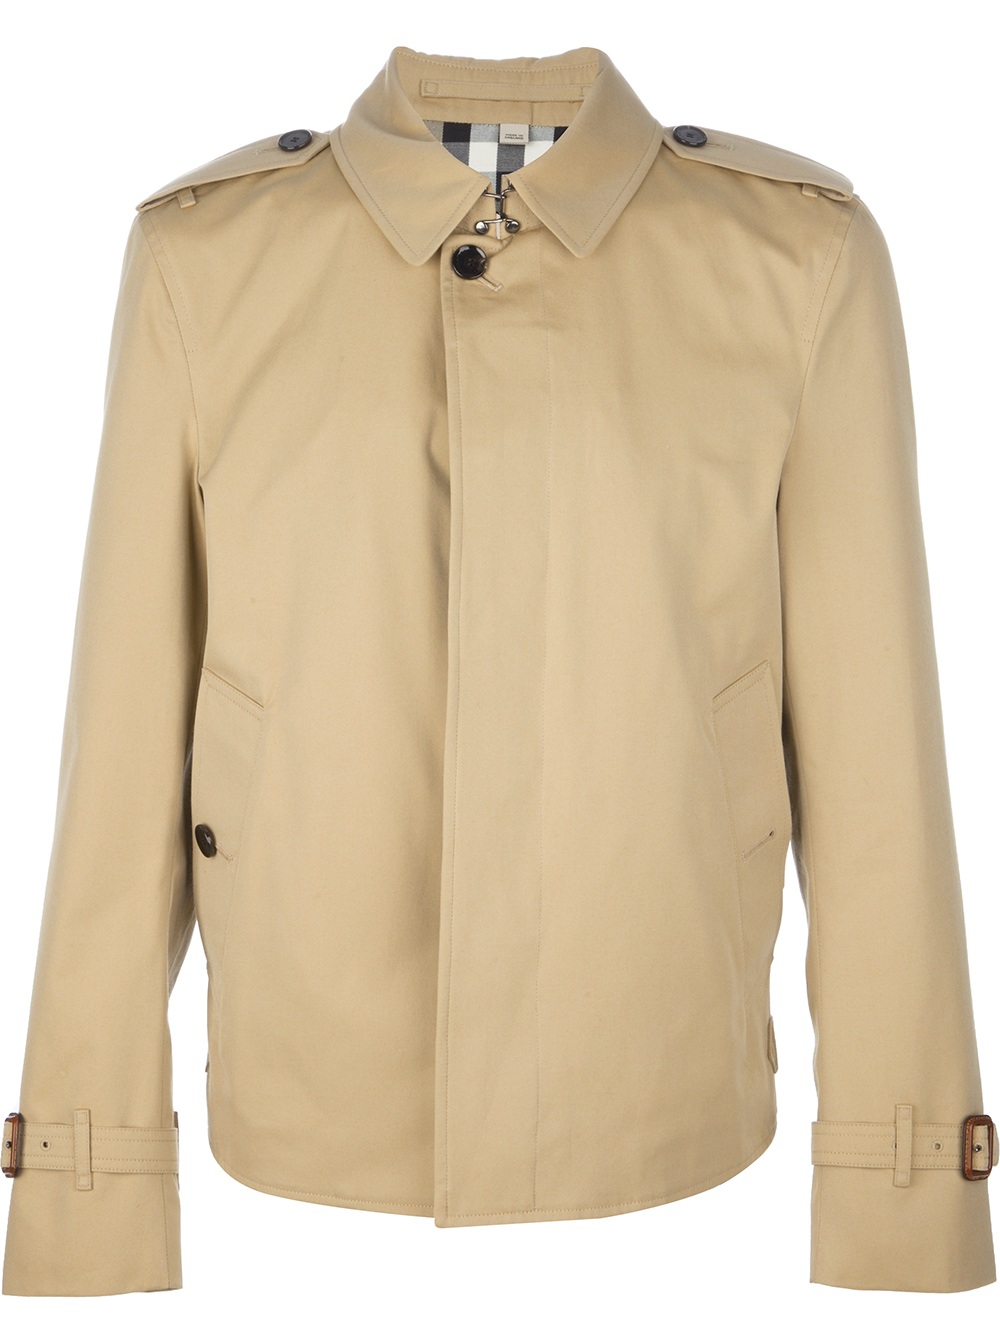 Burberry Harrington Jacket in Beige (Natural) for Men - Lyst